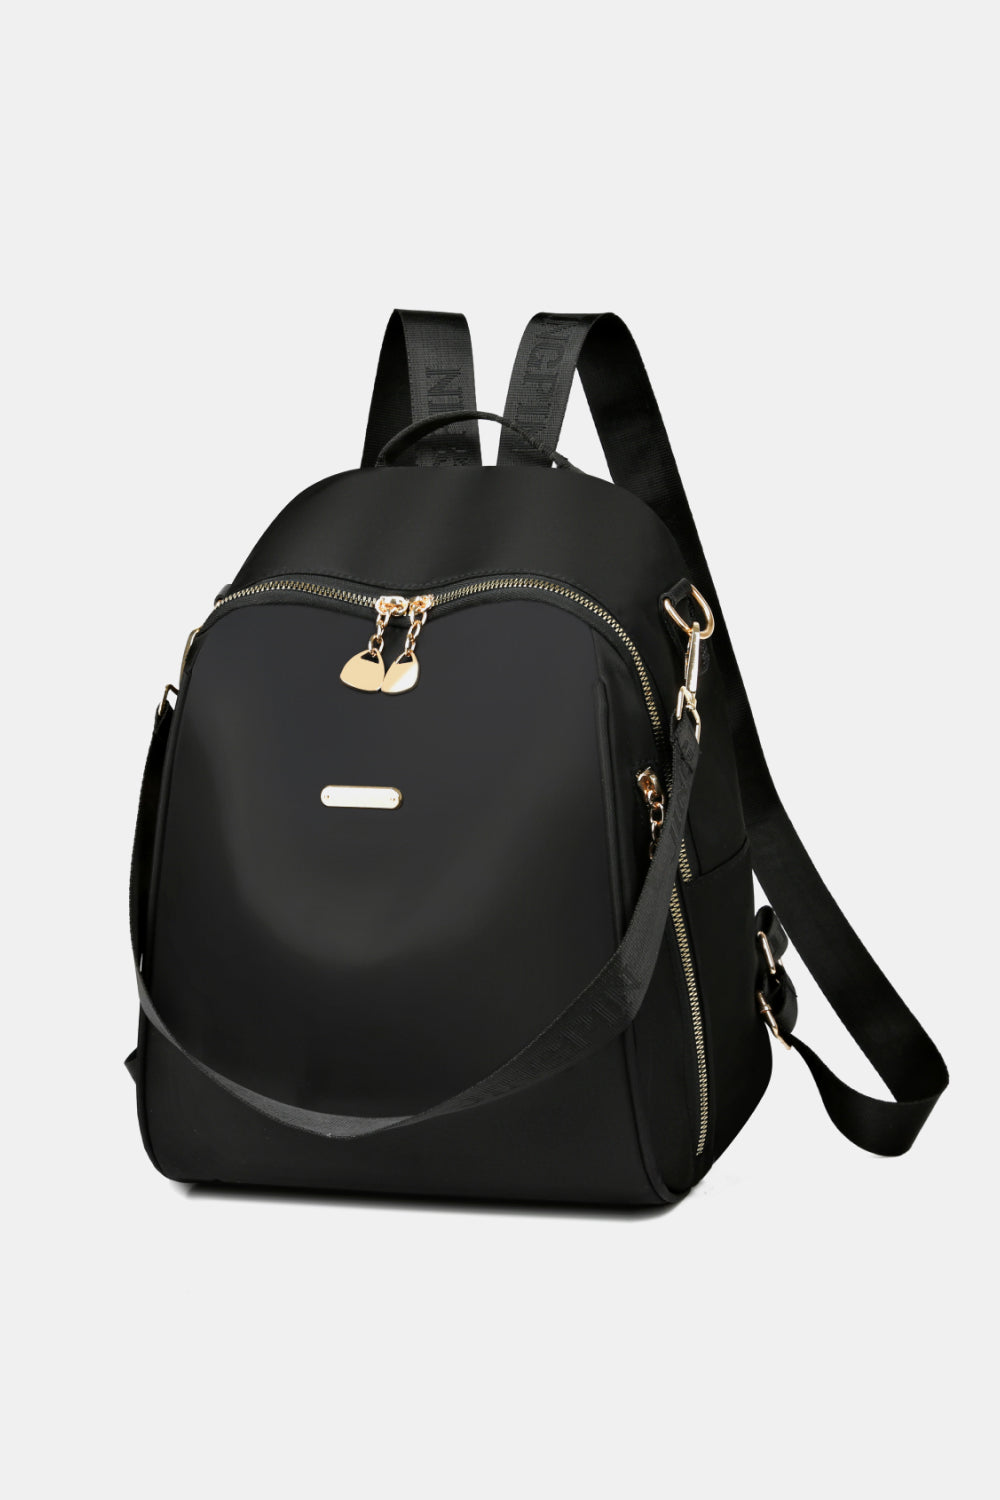 Medium size black Backpack